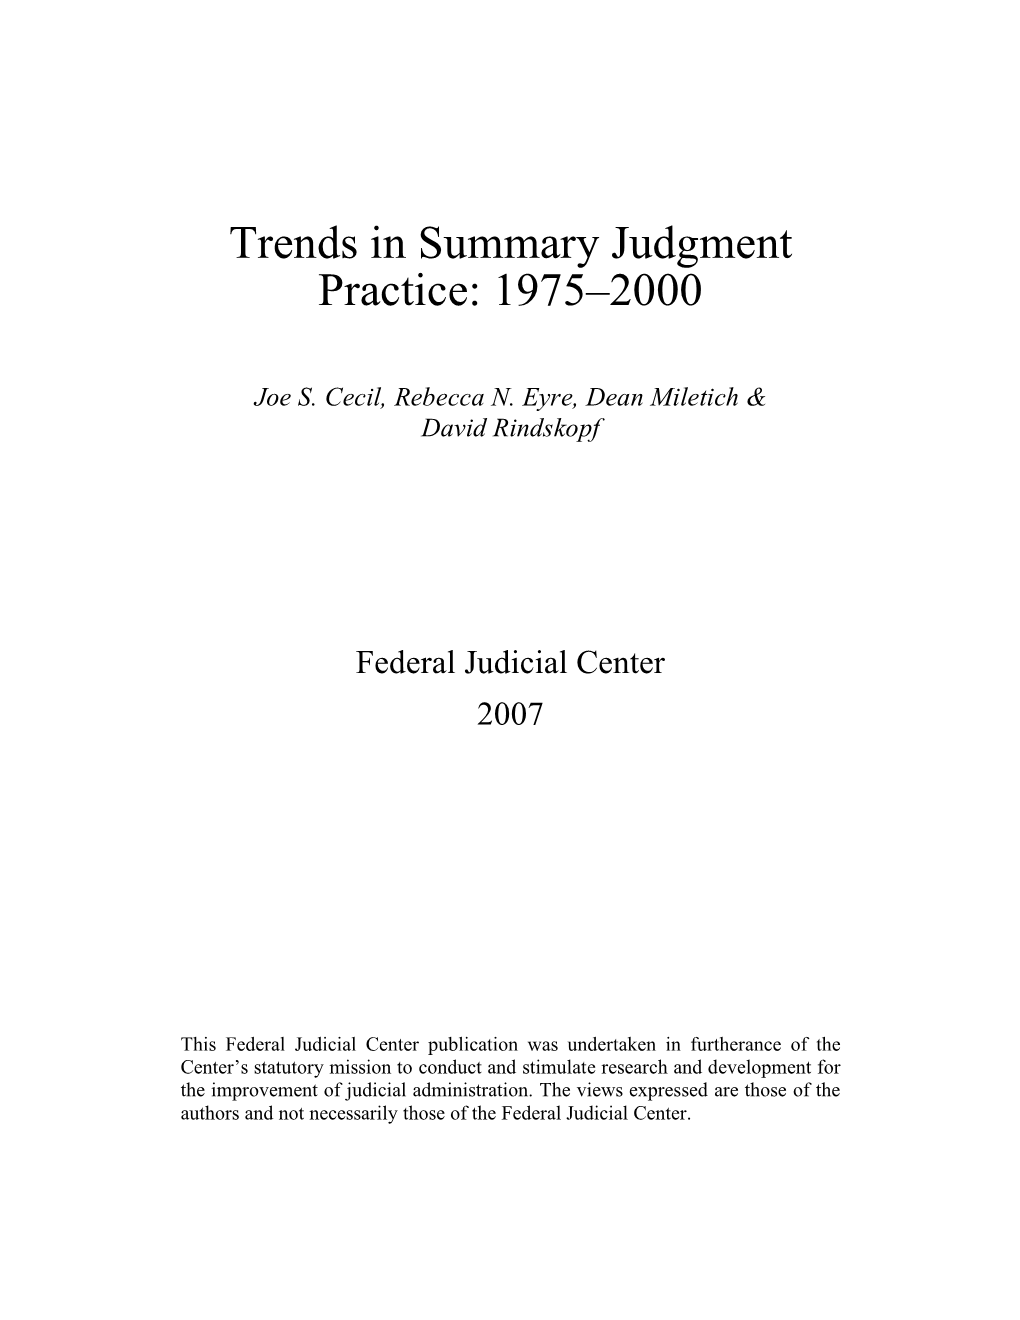 Trends in Summary Judgment Practice: 1975-2000